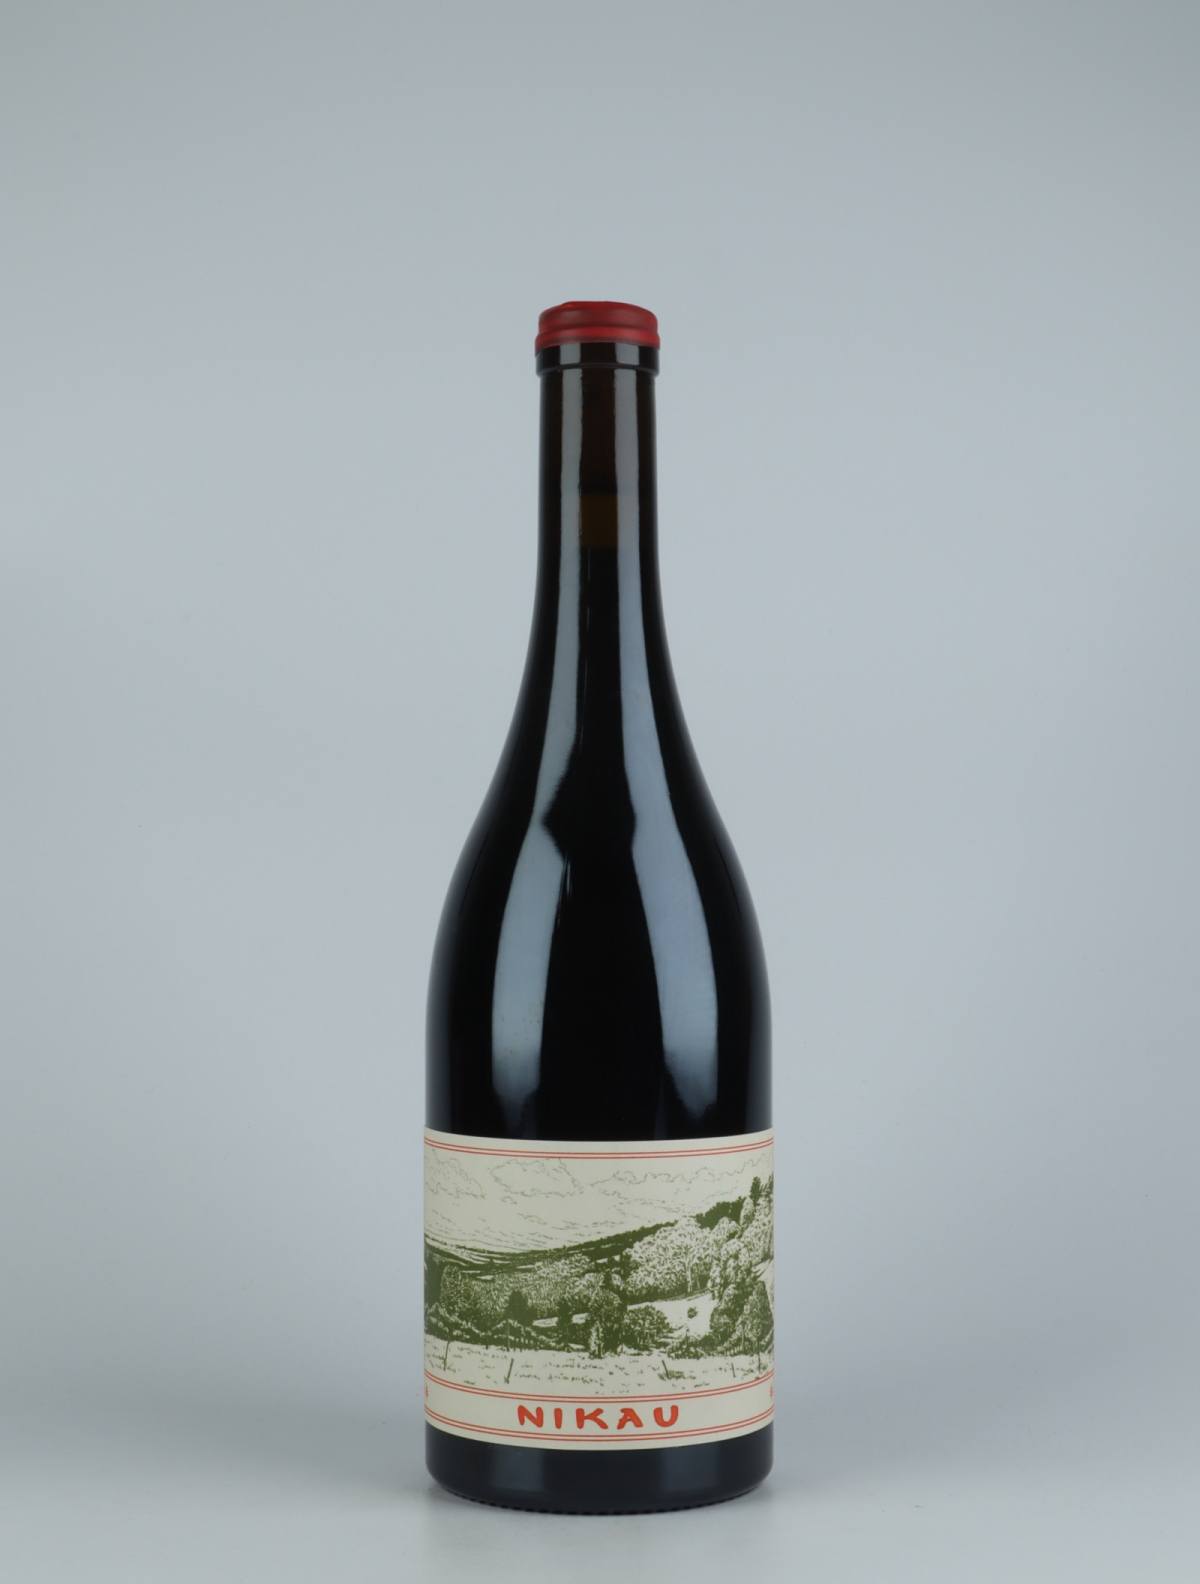 En flaske 2019 Nikau Pinot Noir Rødvin fra Nikau Farm, Victoria i Australien